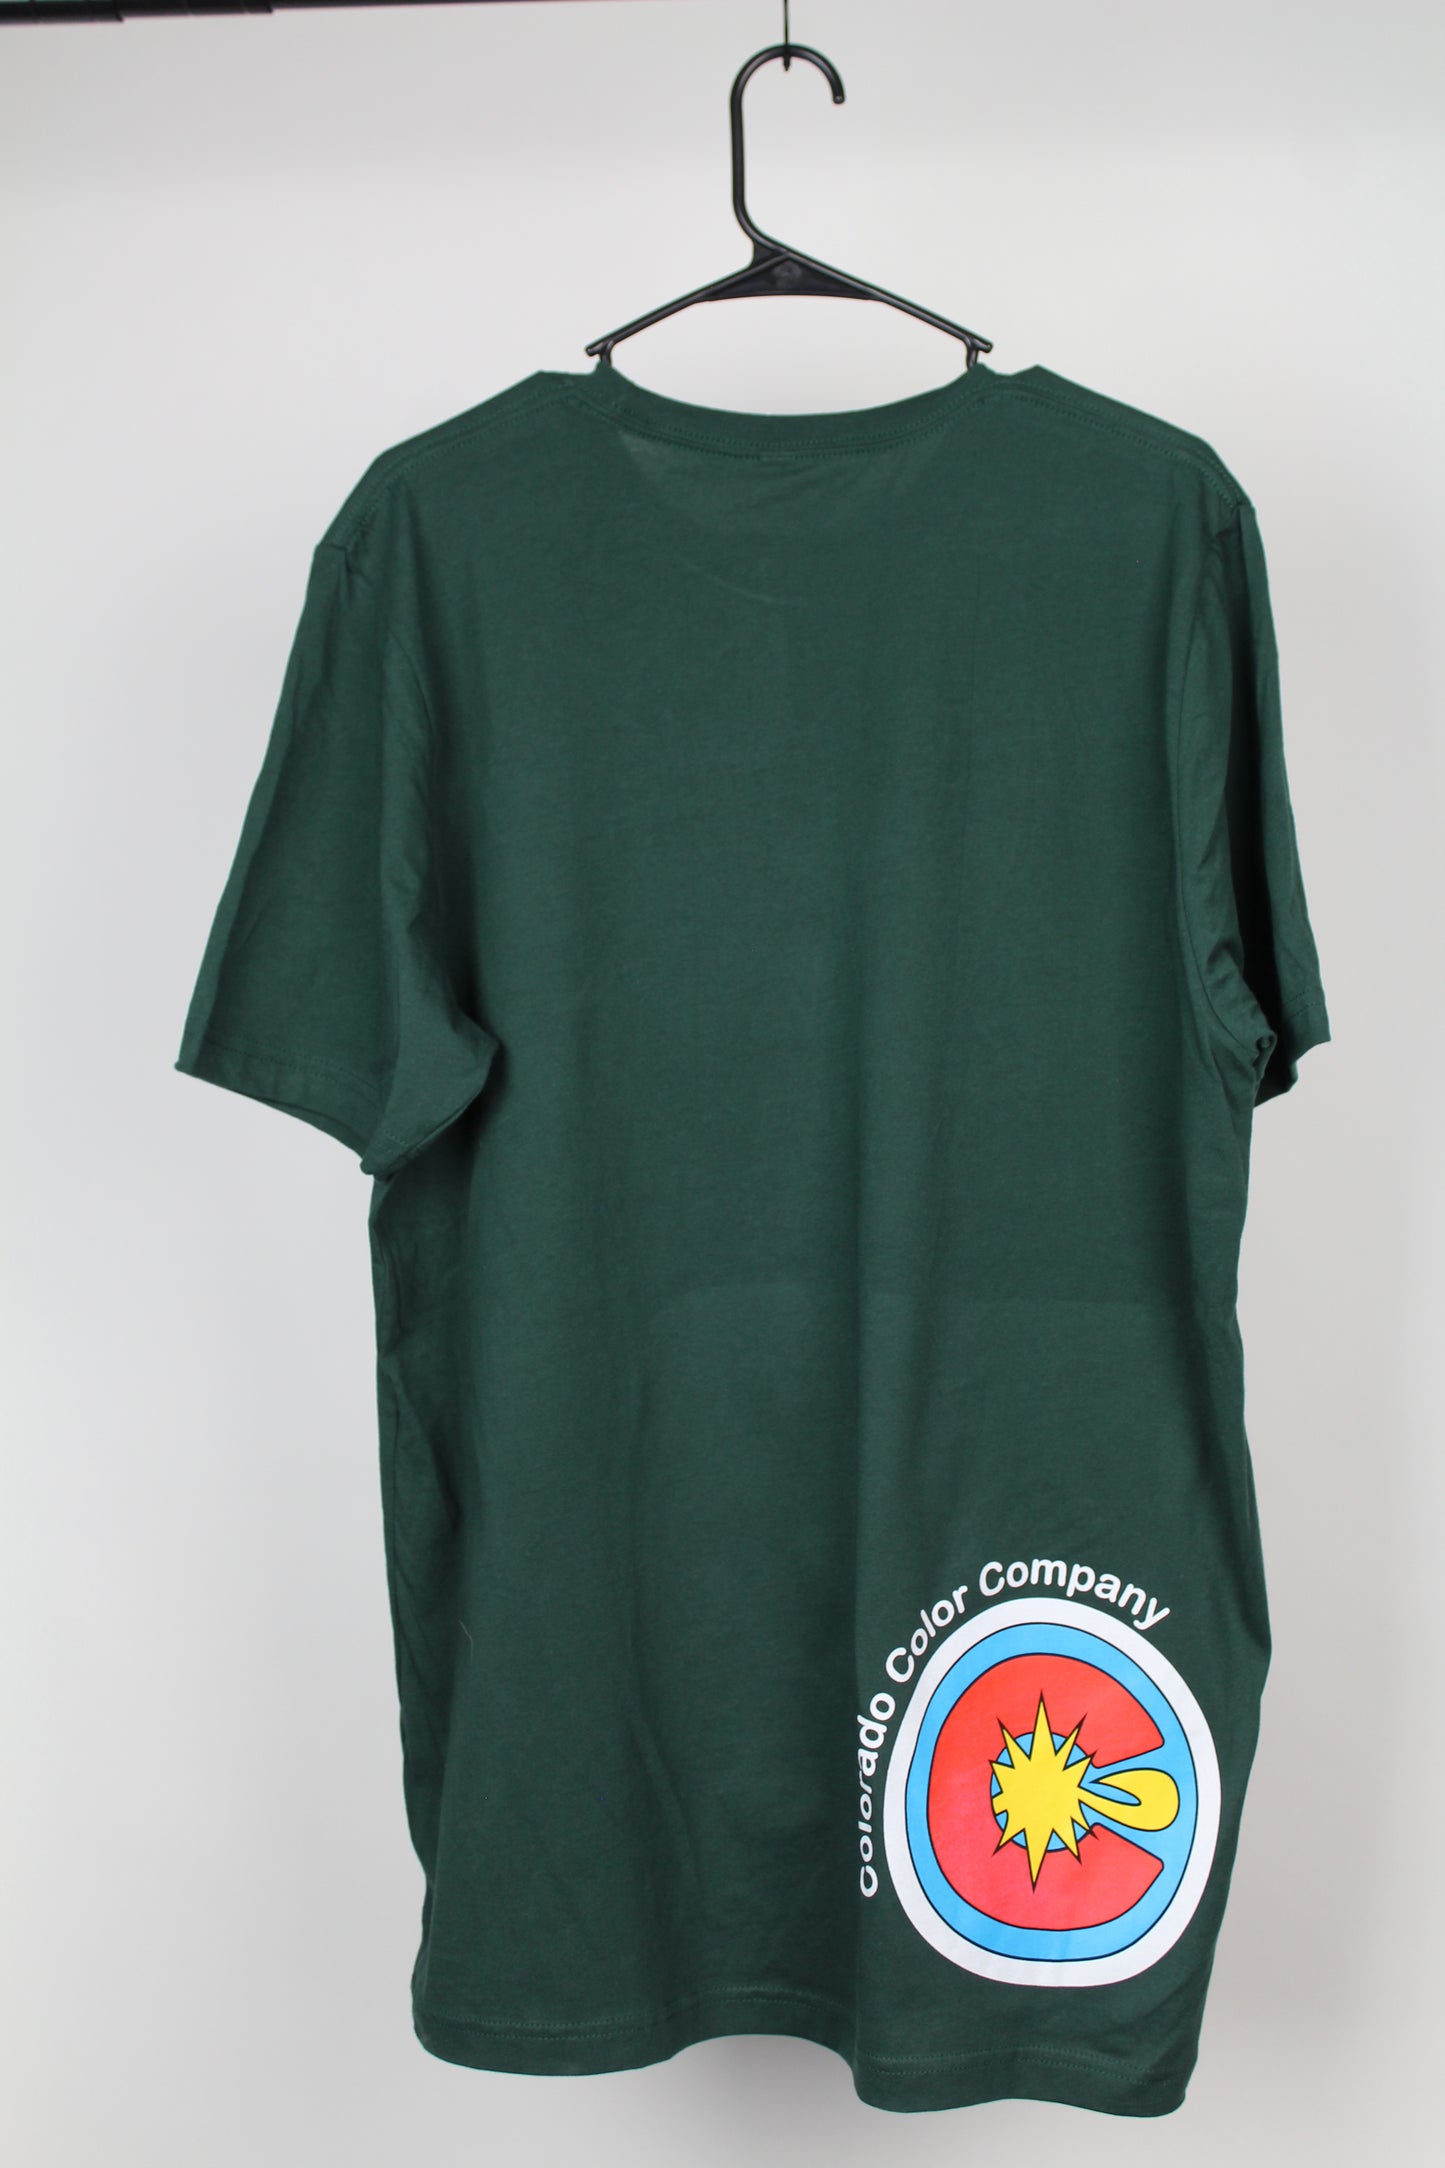 Green Colorado Color Company T-Shirt